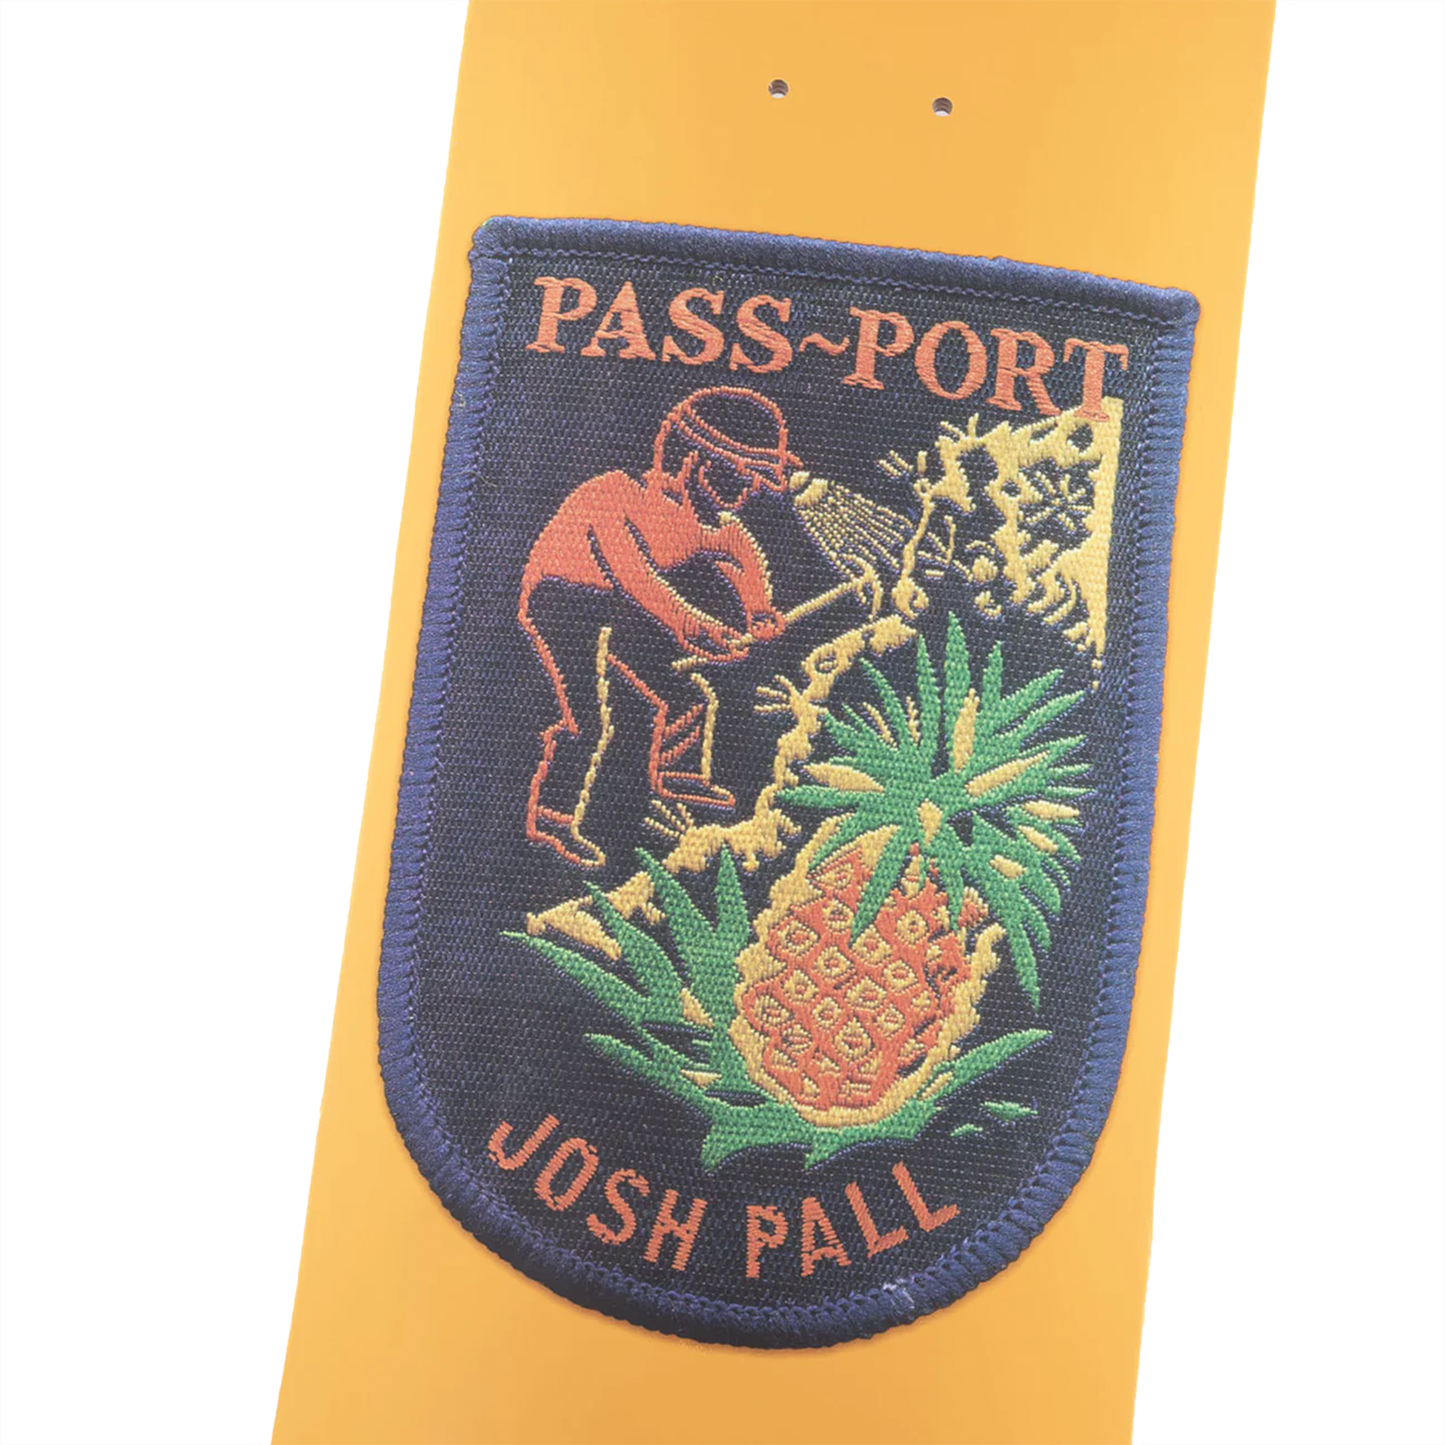 Passport Patch Josh Pall Deck - 8.125